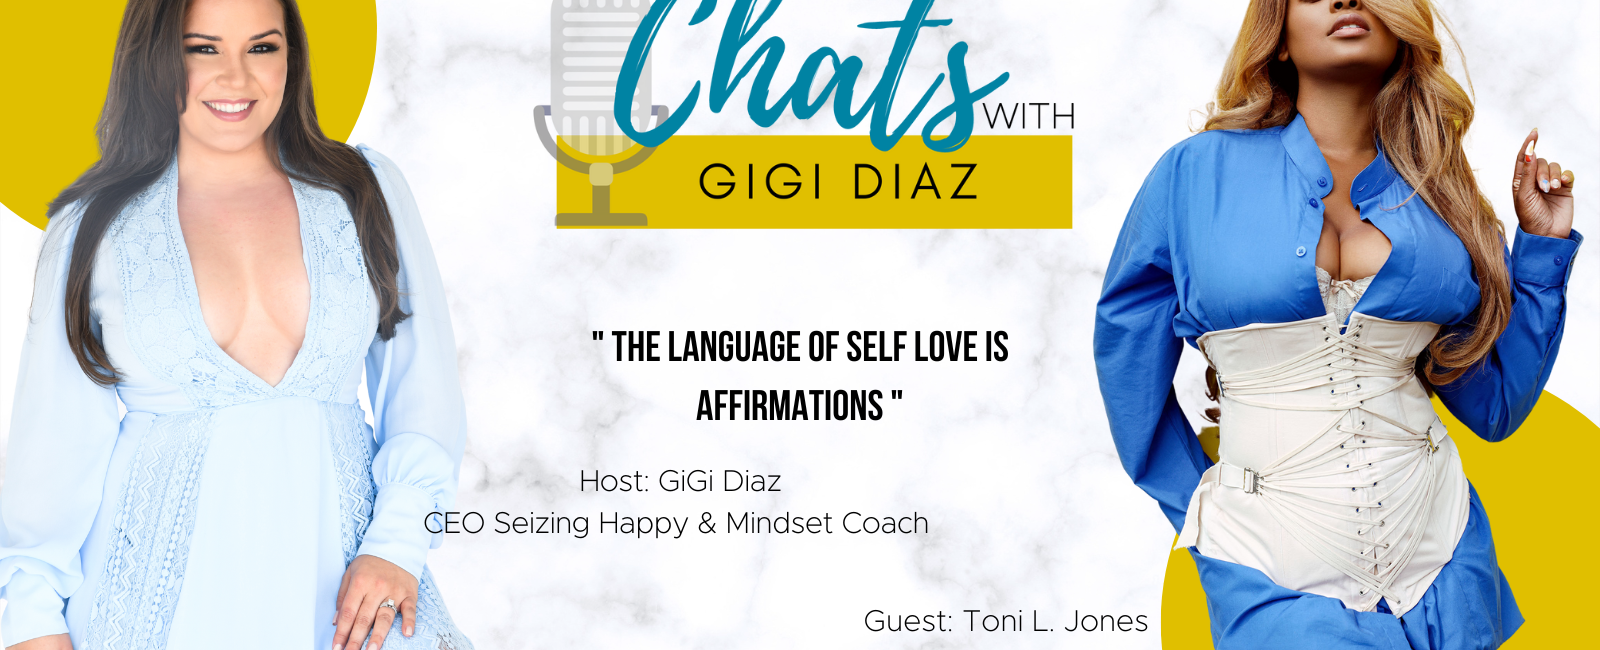 Toni Jones interview with GiGi Diaz on Chats with GiGi